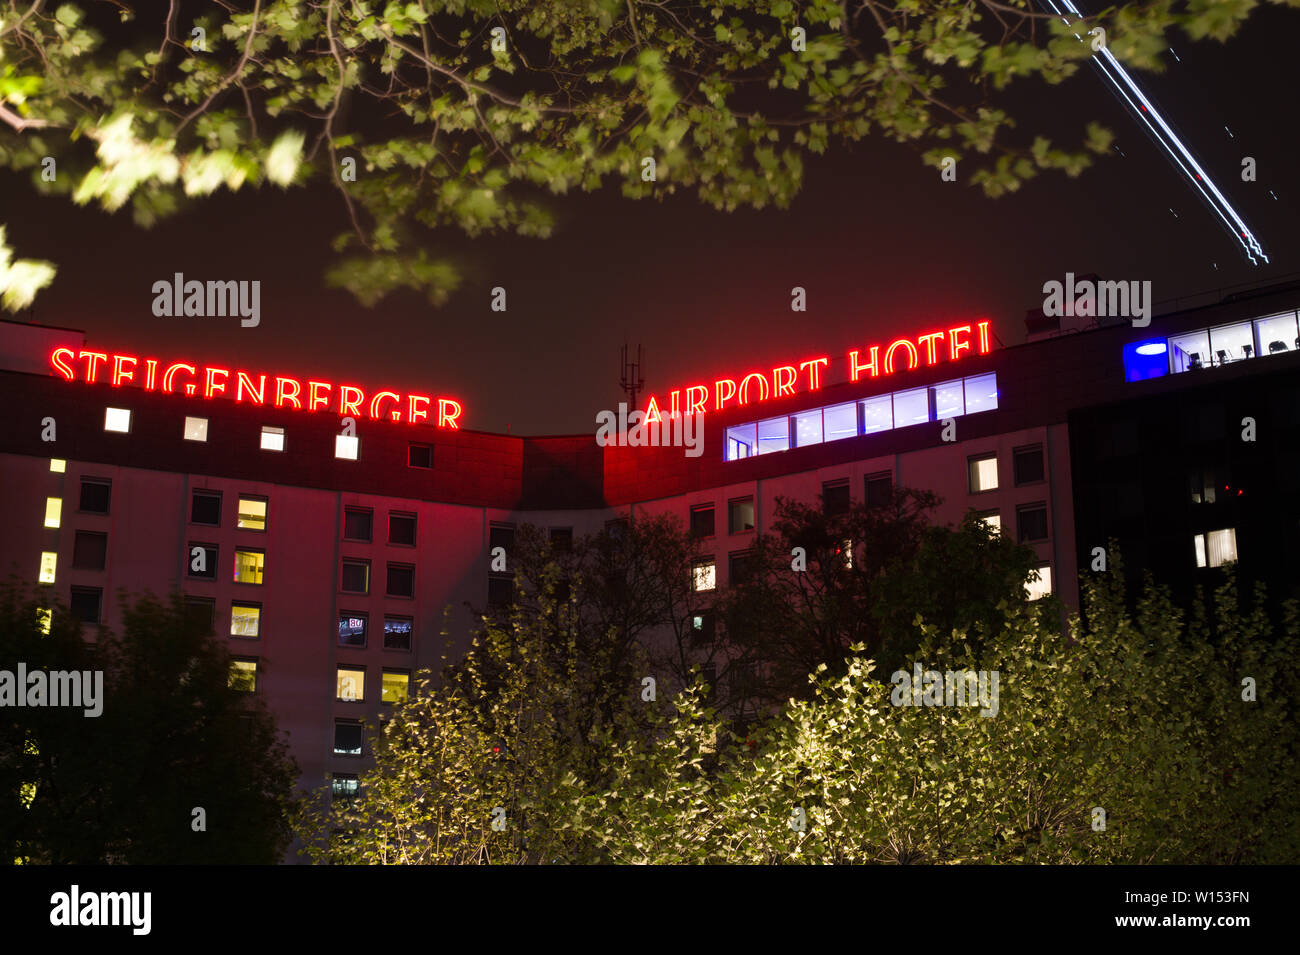 The Steigenberger Airport Hotel, Frankfurt am Main, Germany Stock Photo